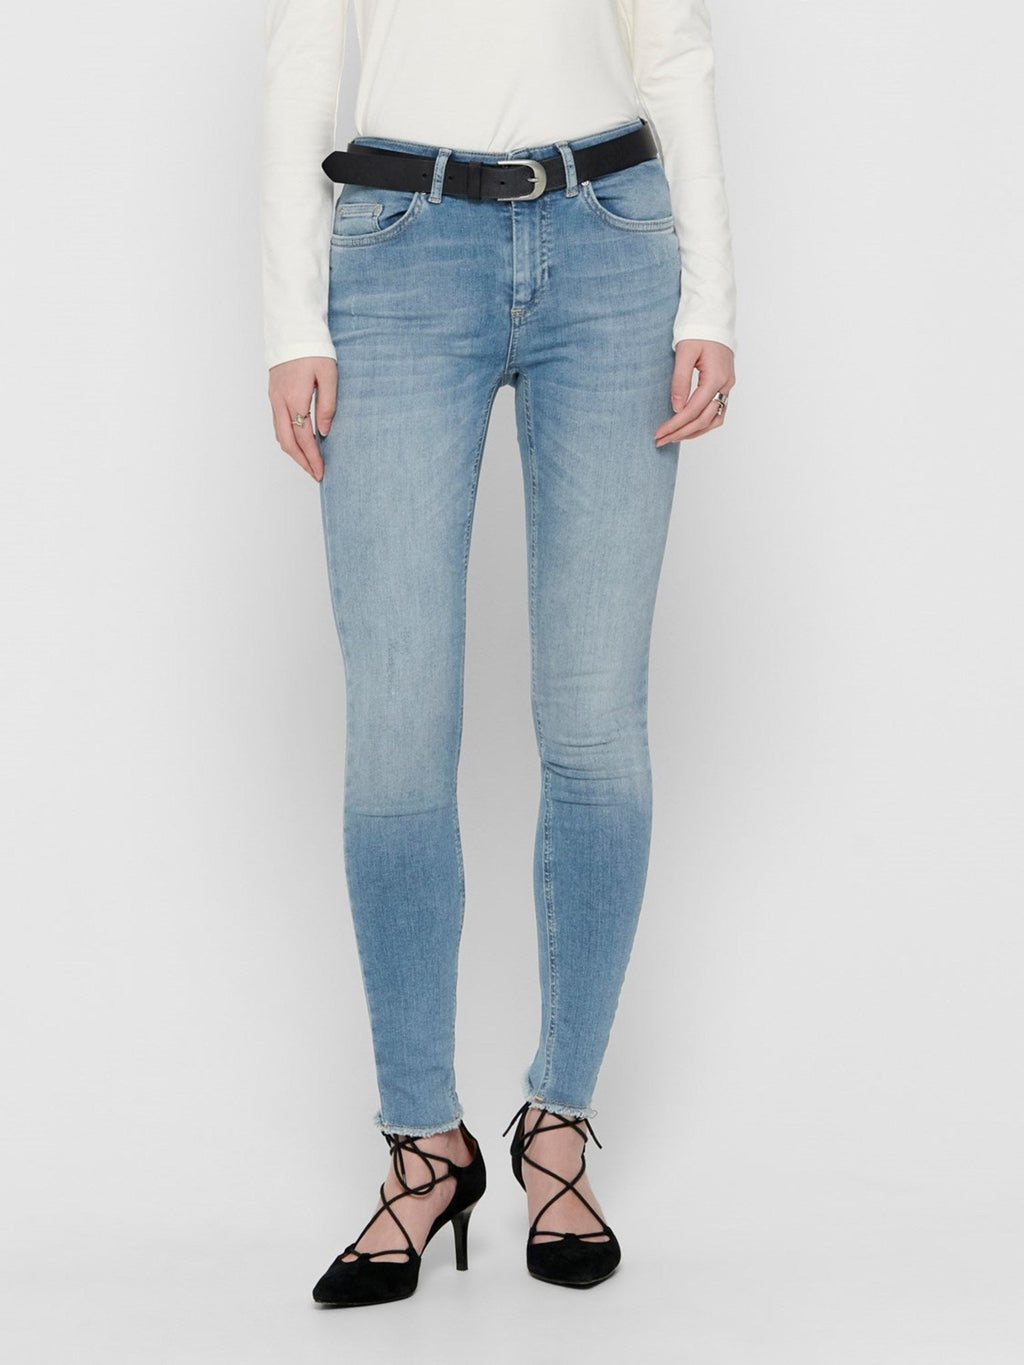 Blush Mid Jeans - mezclilla azul claro